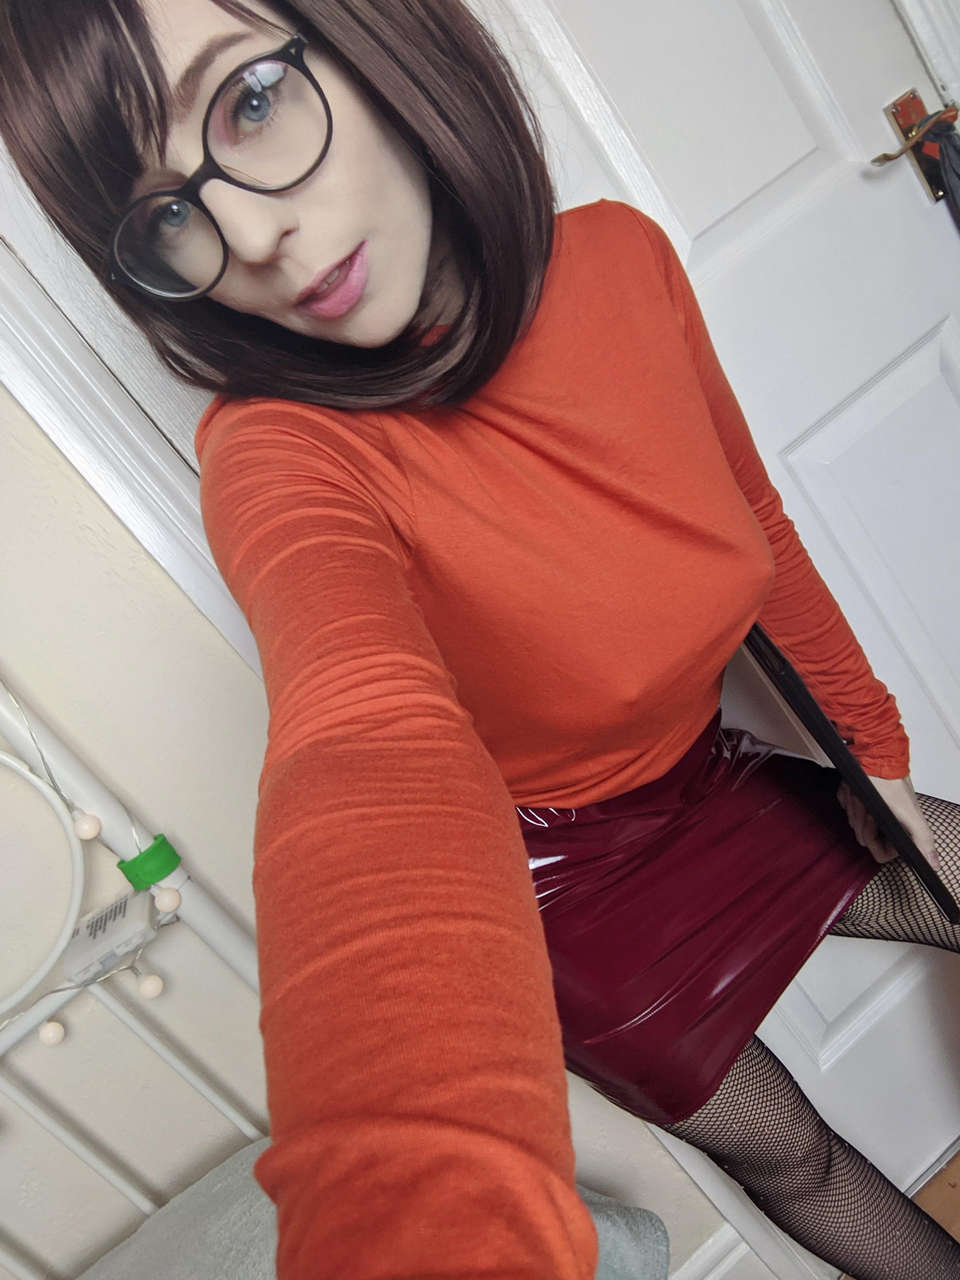 Velma By Hayley Quin